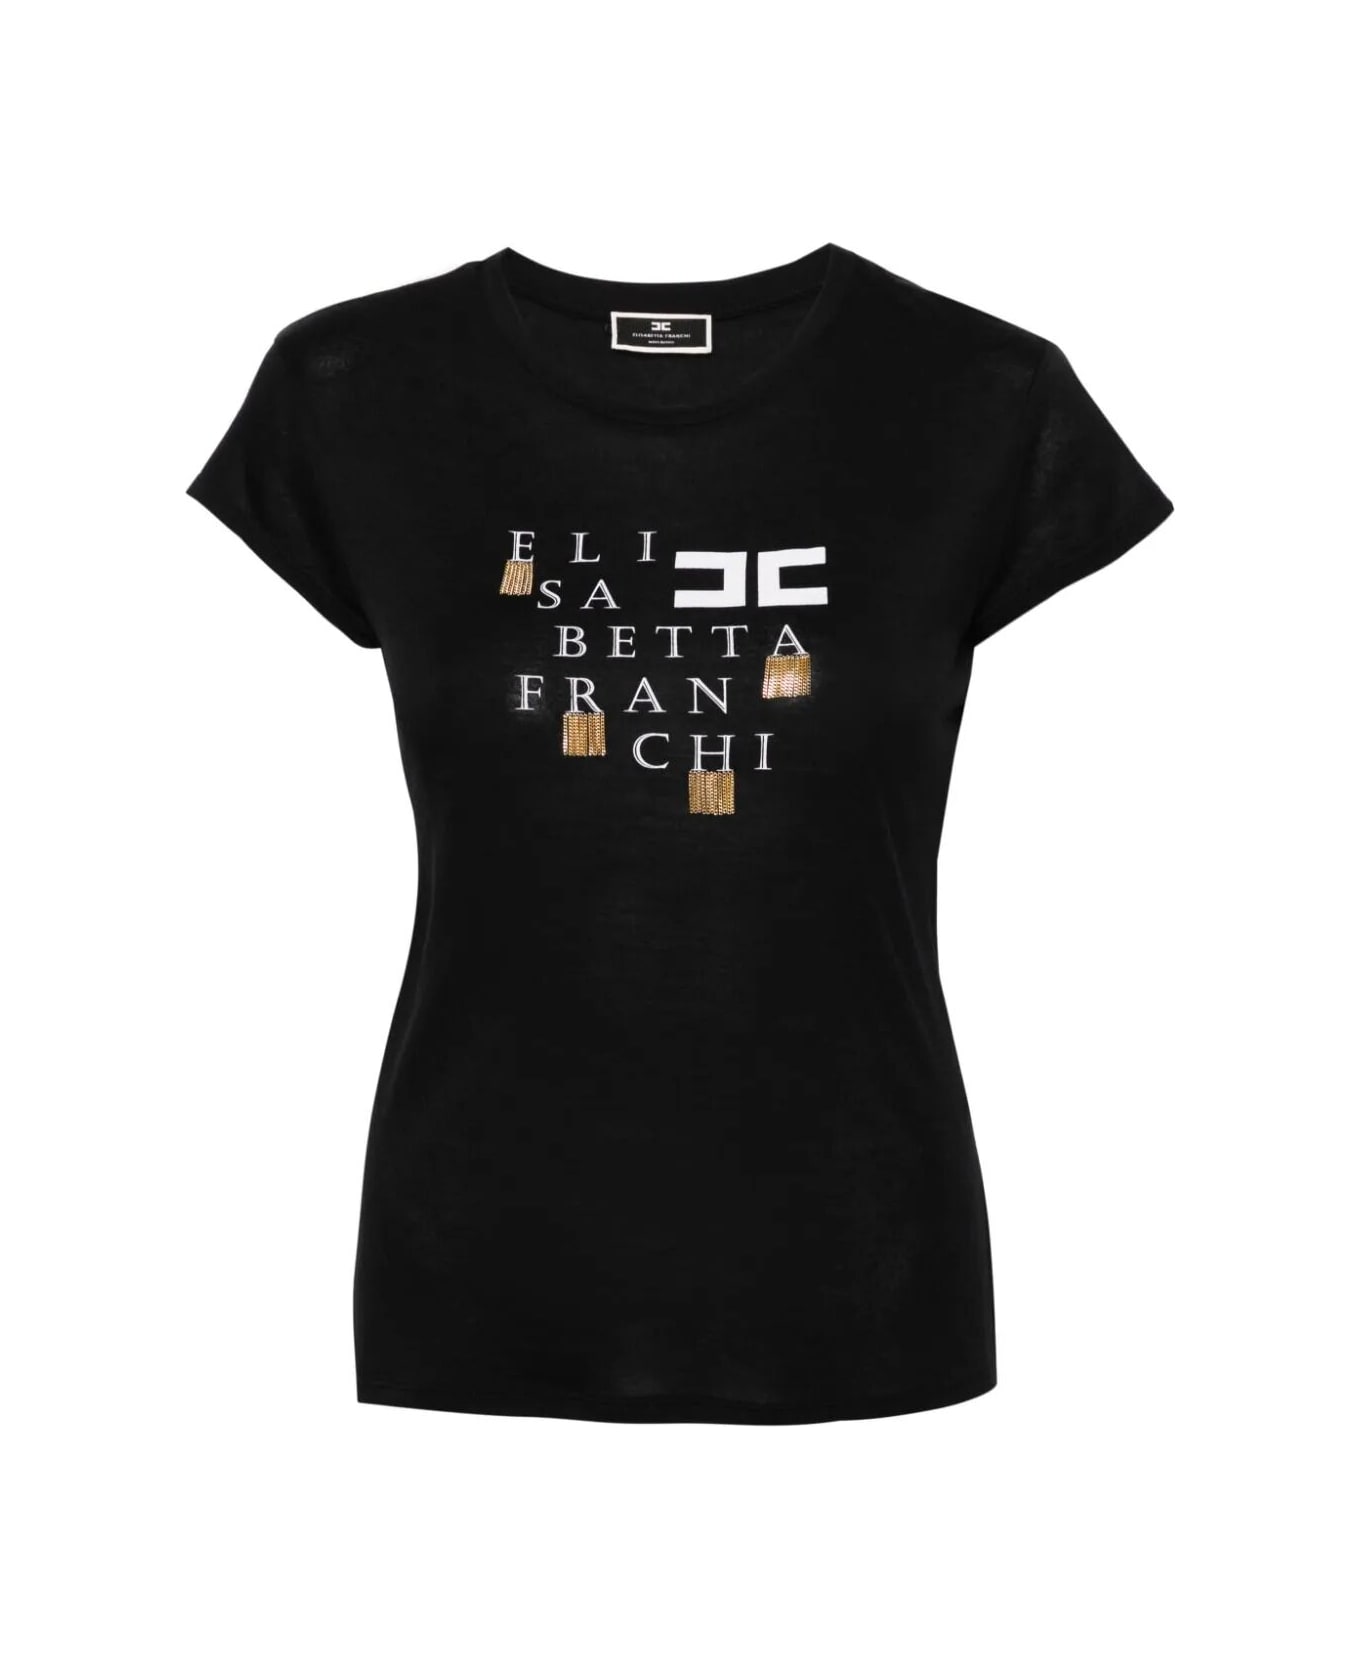 Elisabetta Franchi Black T-shirt With Prints - Black Tシャツ